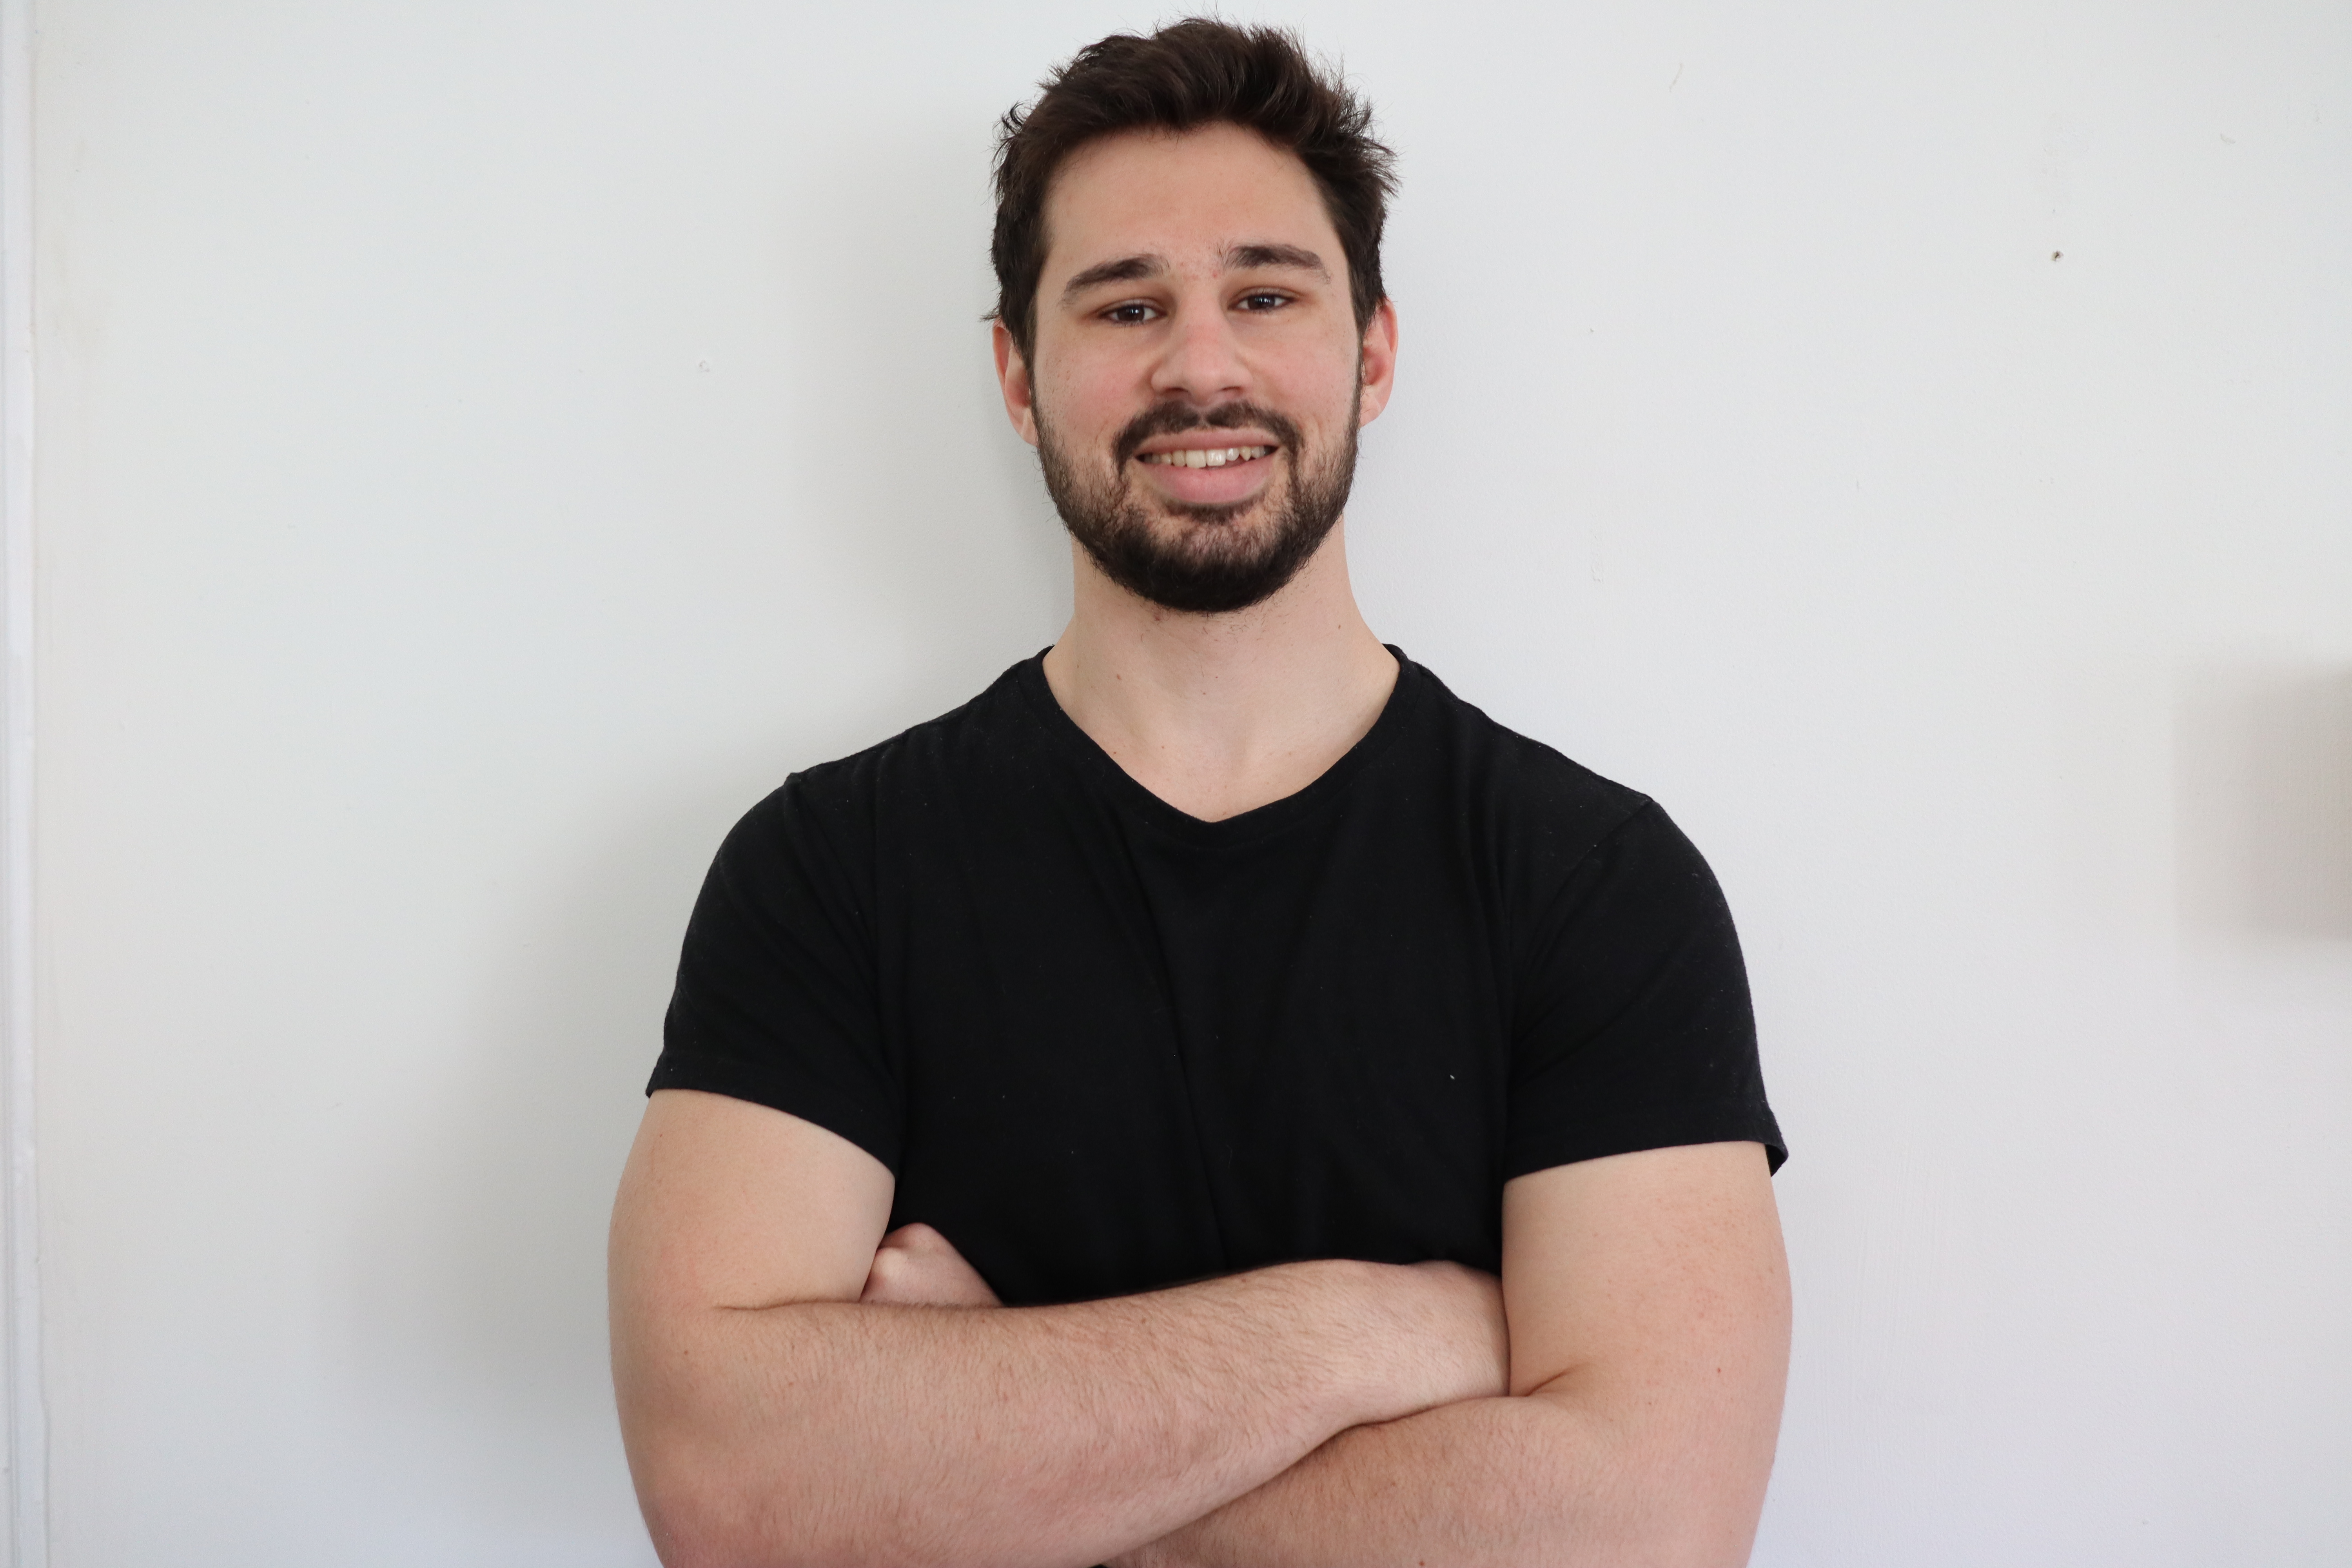 Alex Vella - Sports betting software developer and entrepreneur